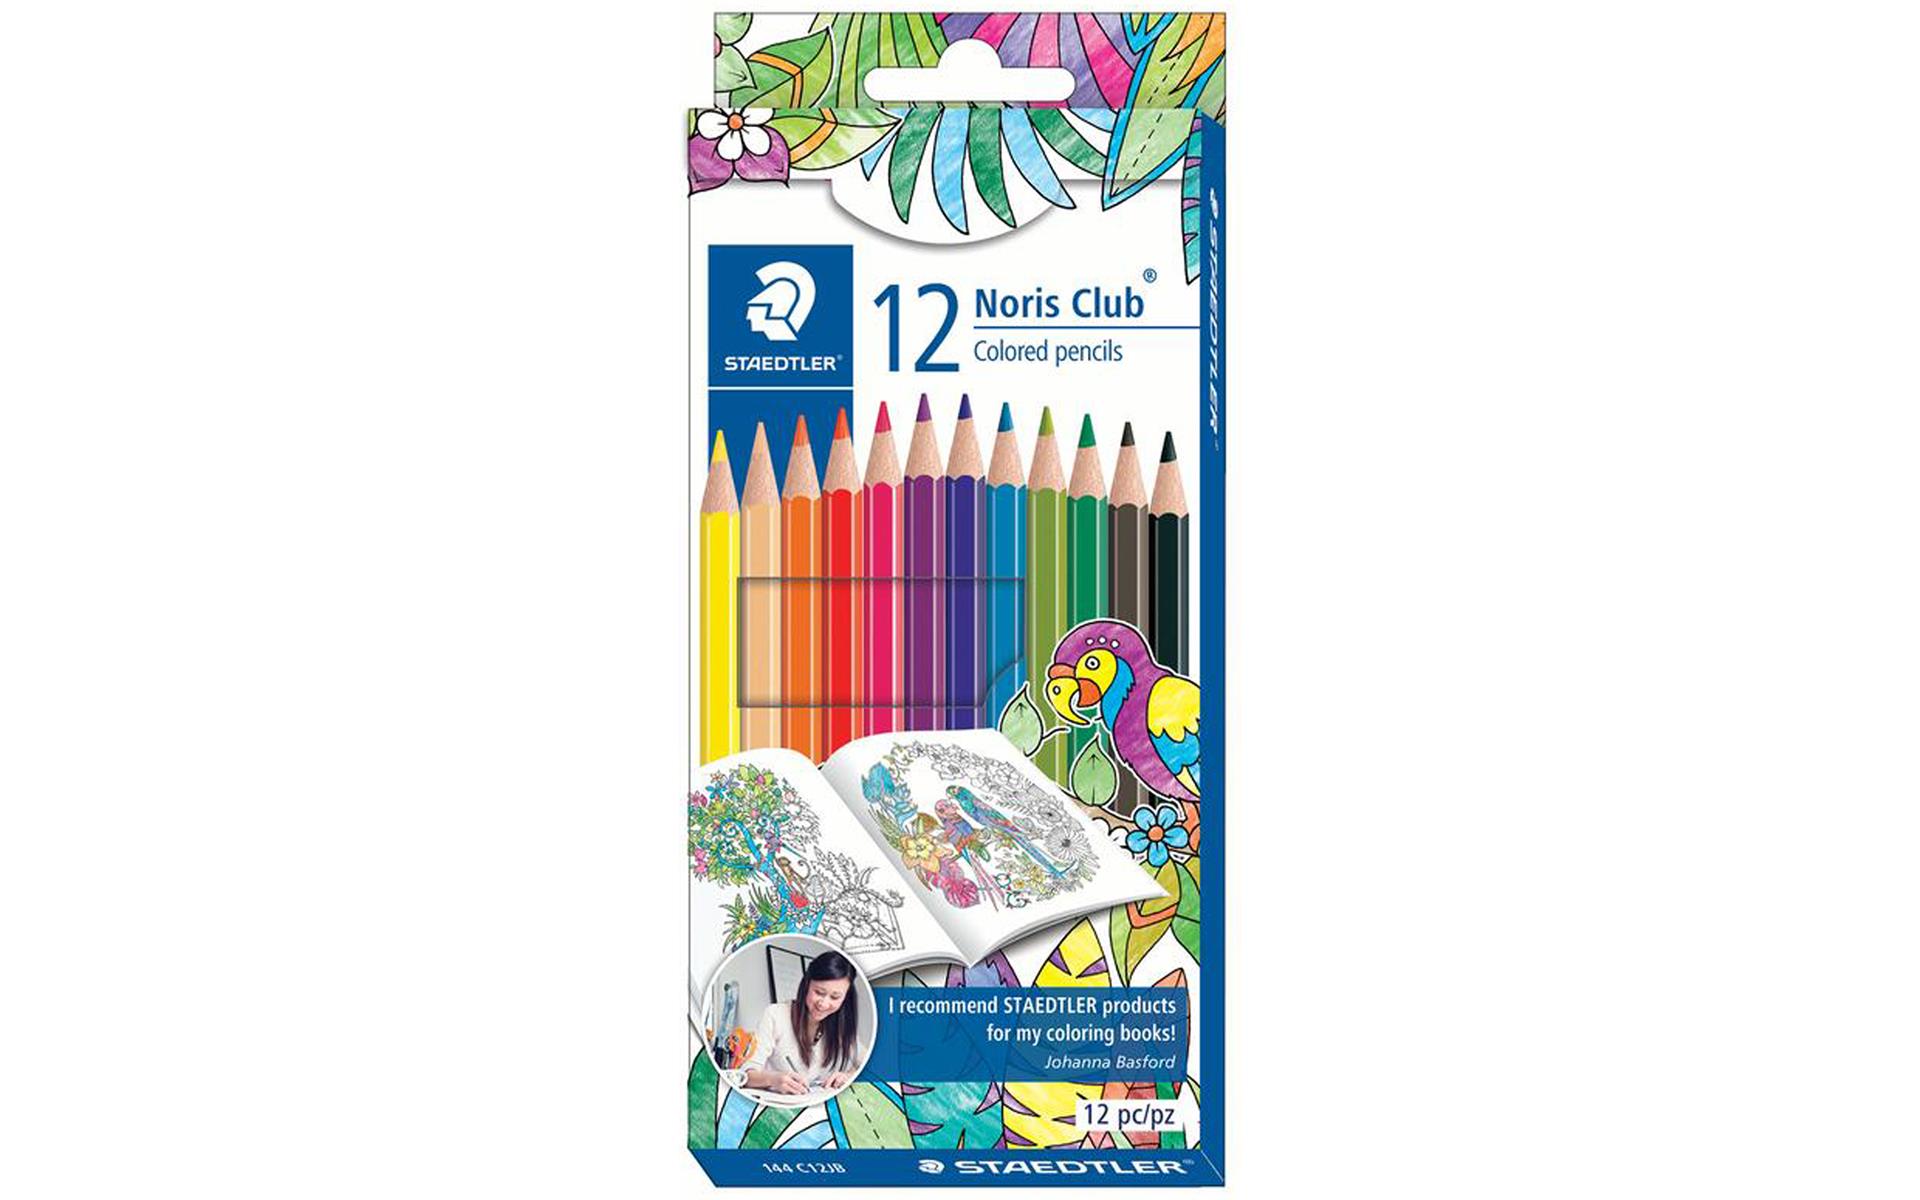 Staedtler Noris Club Colored Pencils 12pc | eBay